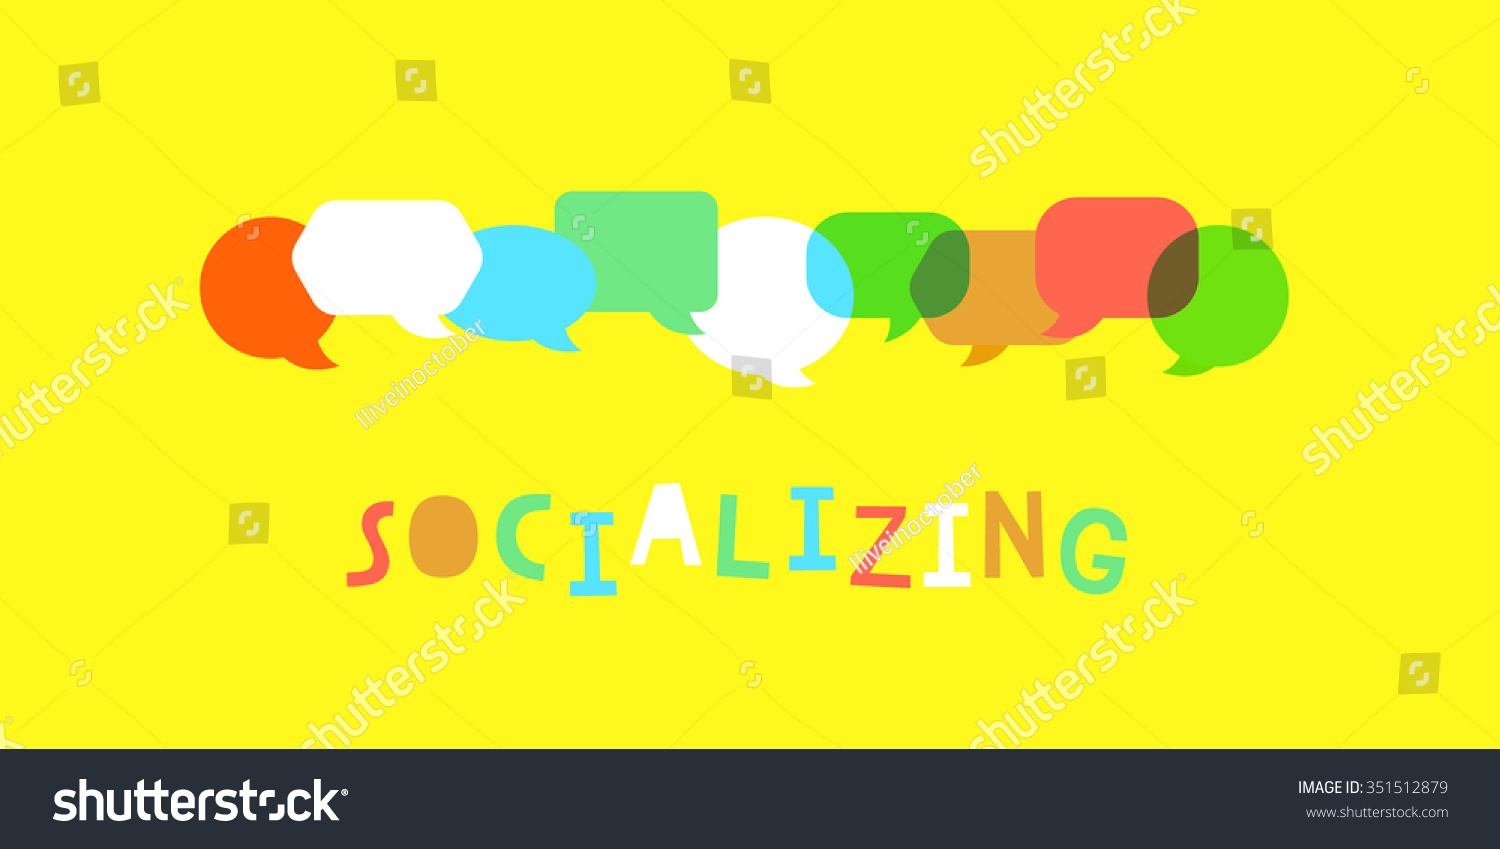 Vector Illustration Speech Bubbles Word Socializing Stock